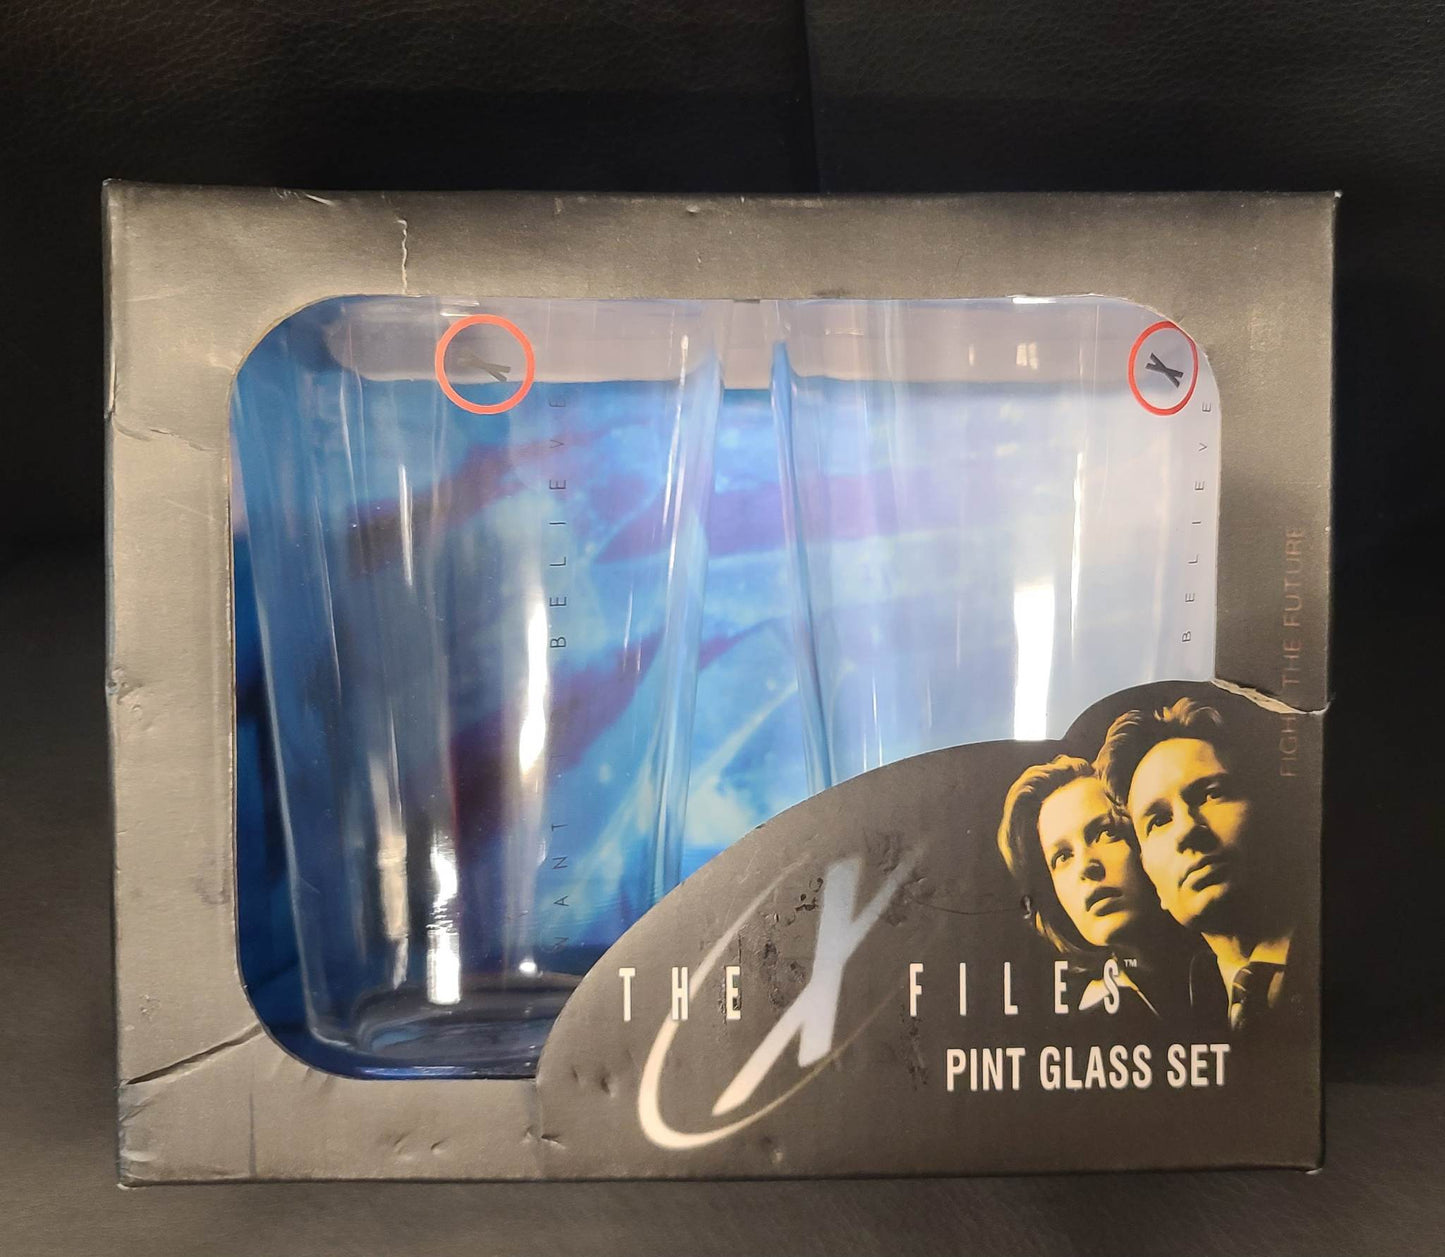 X-Files Pint Glass Set